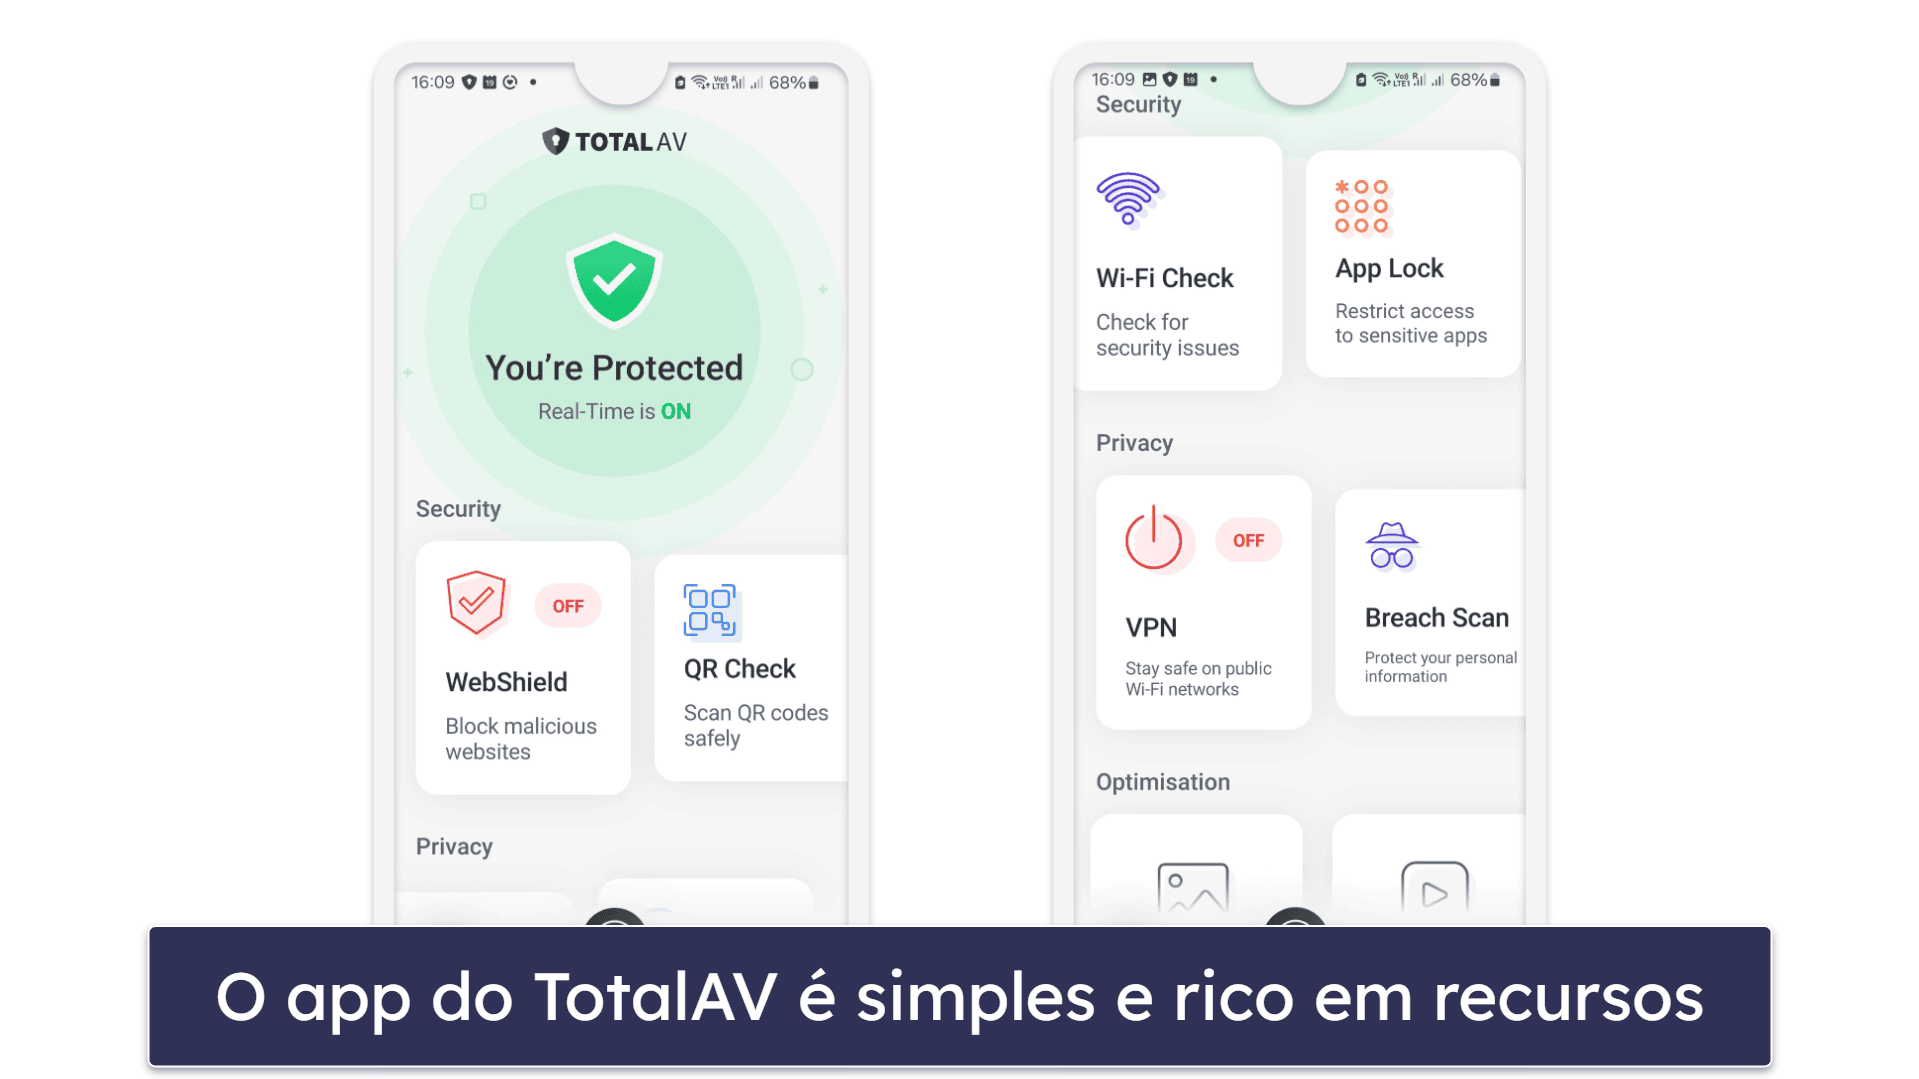 TotalAV Mobile App